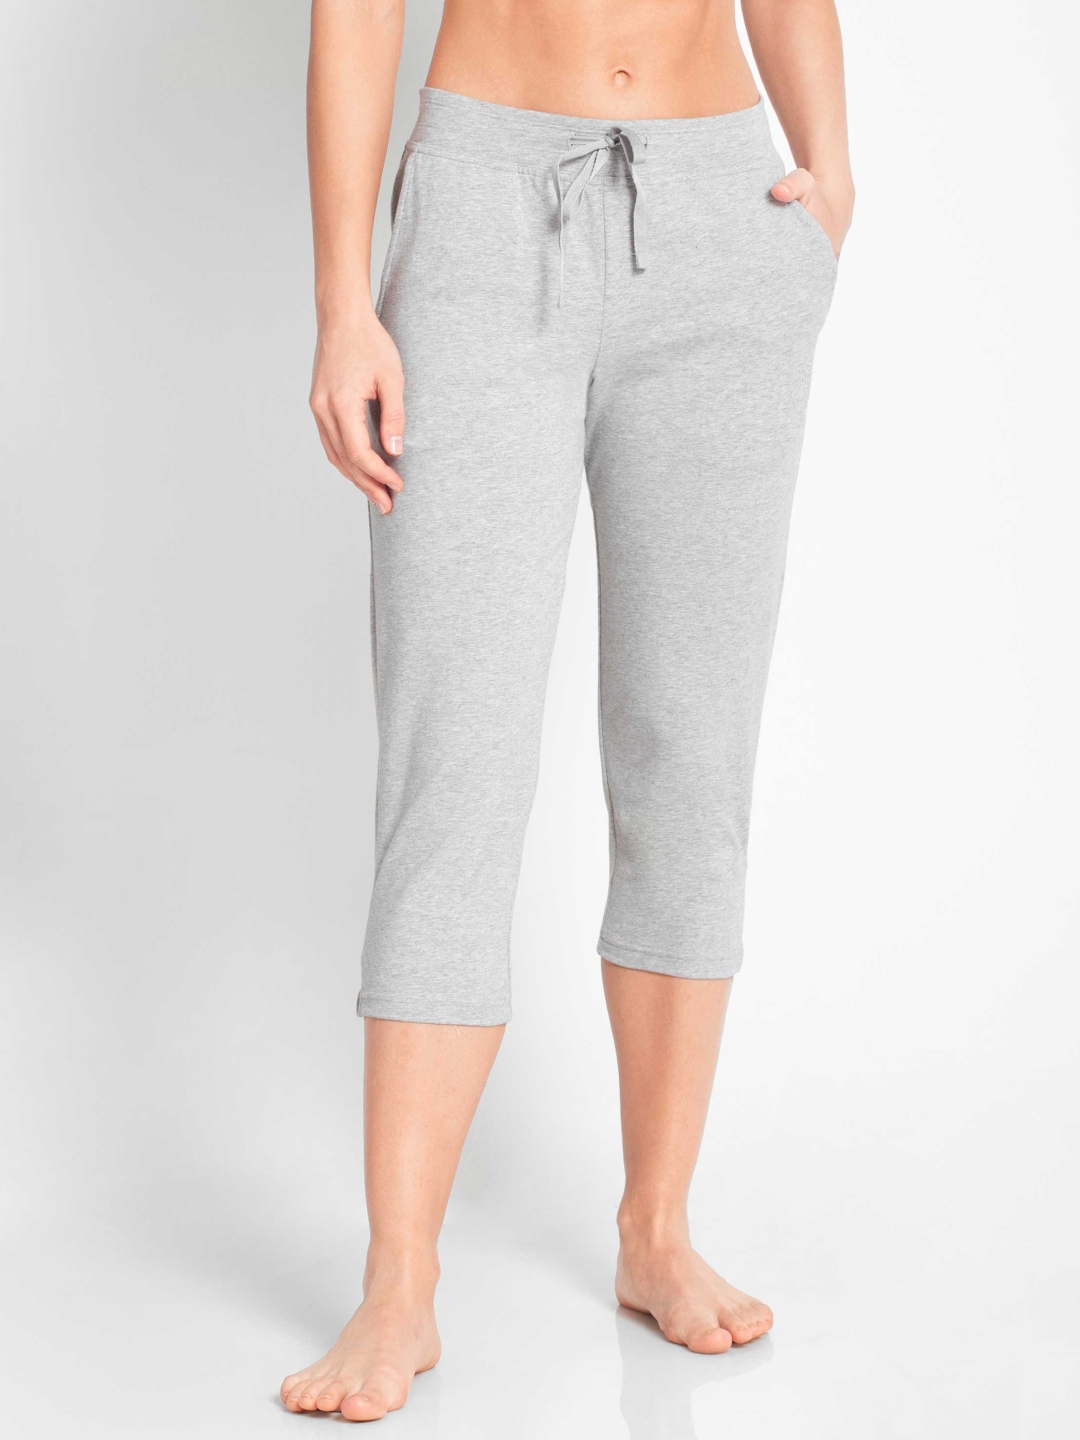 Buy Jockey Women Grey Melange Knit Lounge Capris - Lounge Pants